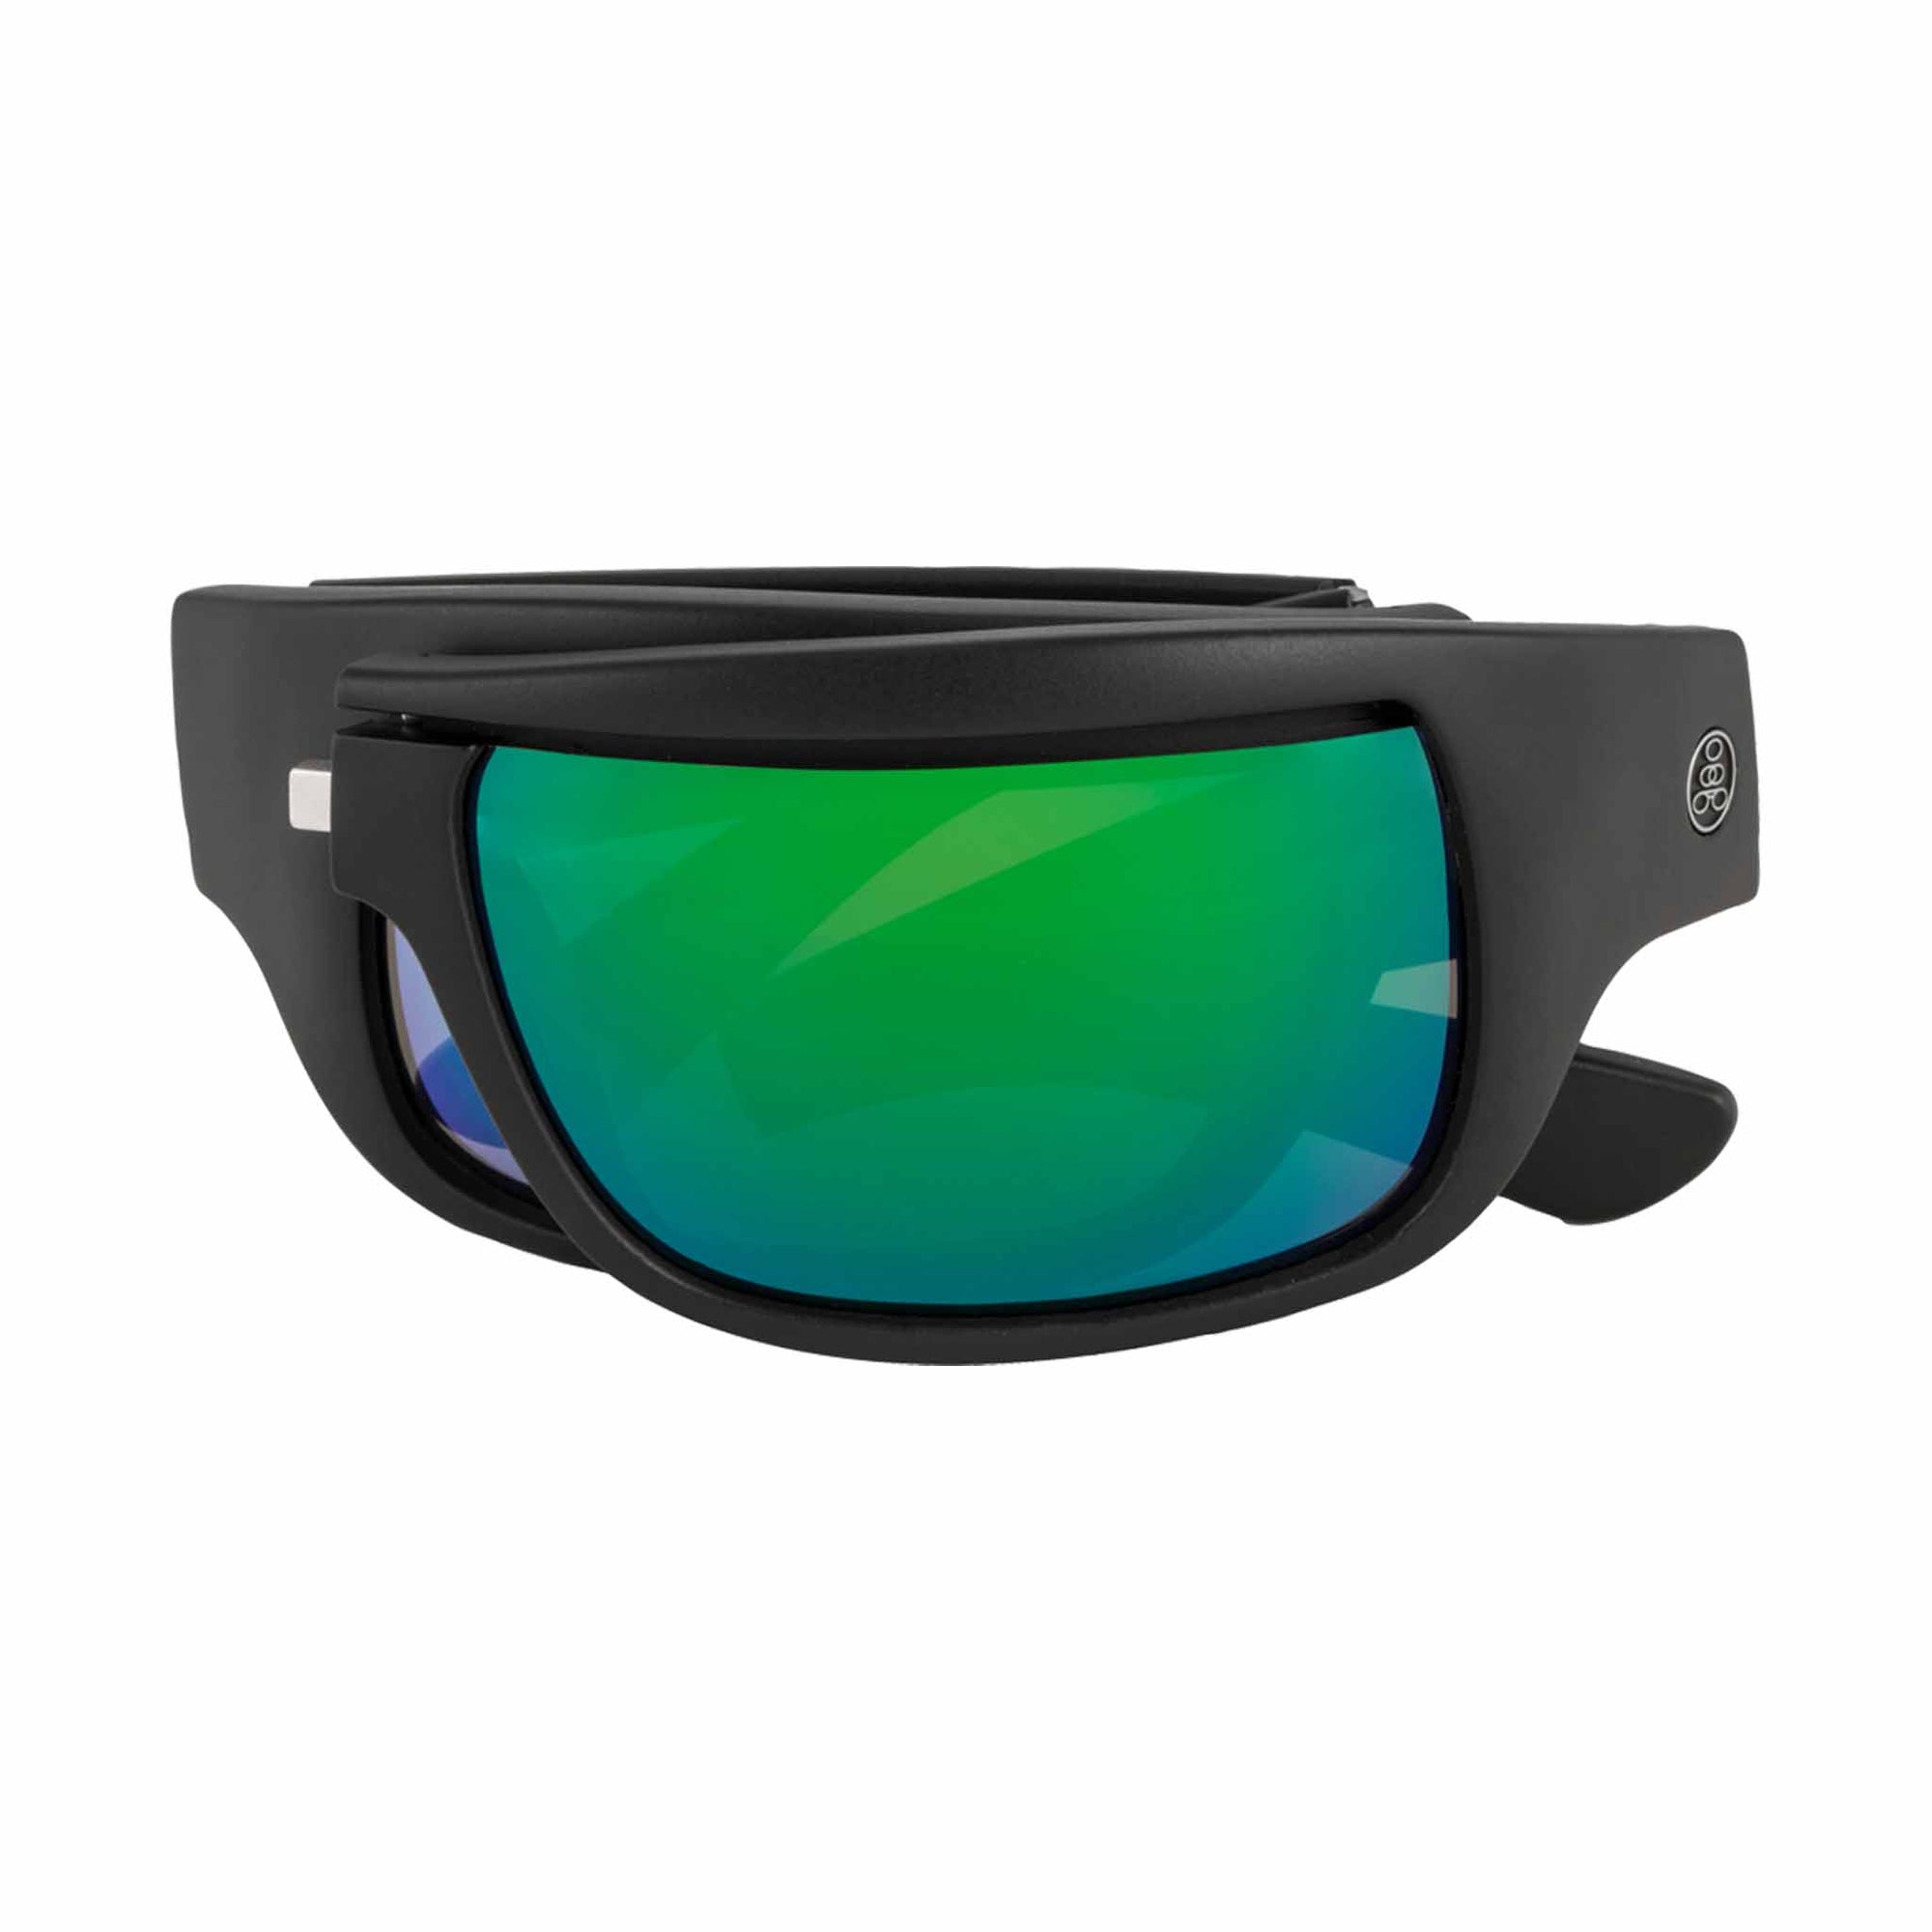 Popticals, Premium Compact Sunglasses, PopH2O, 010070-BMEN, Polarized Sunglasses, Matte Black Frame, Gray Lenses w/Green Mirror Finish, Compact View